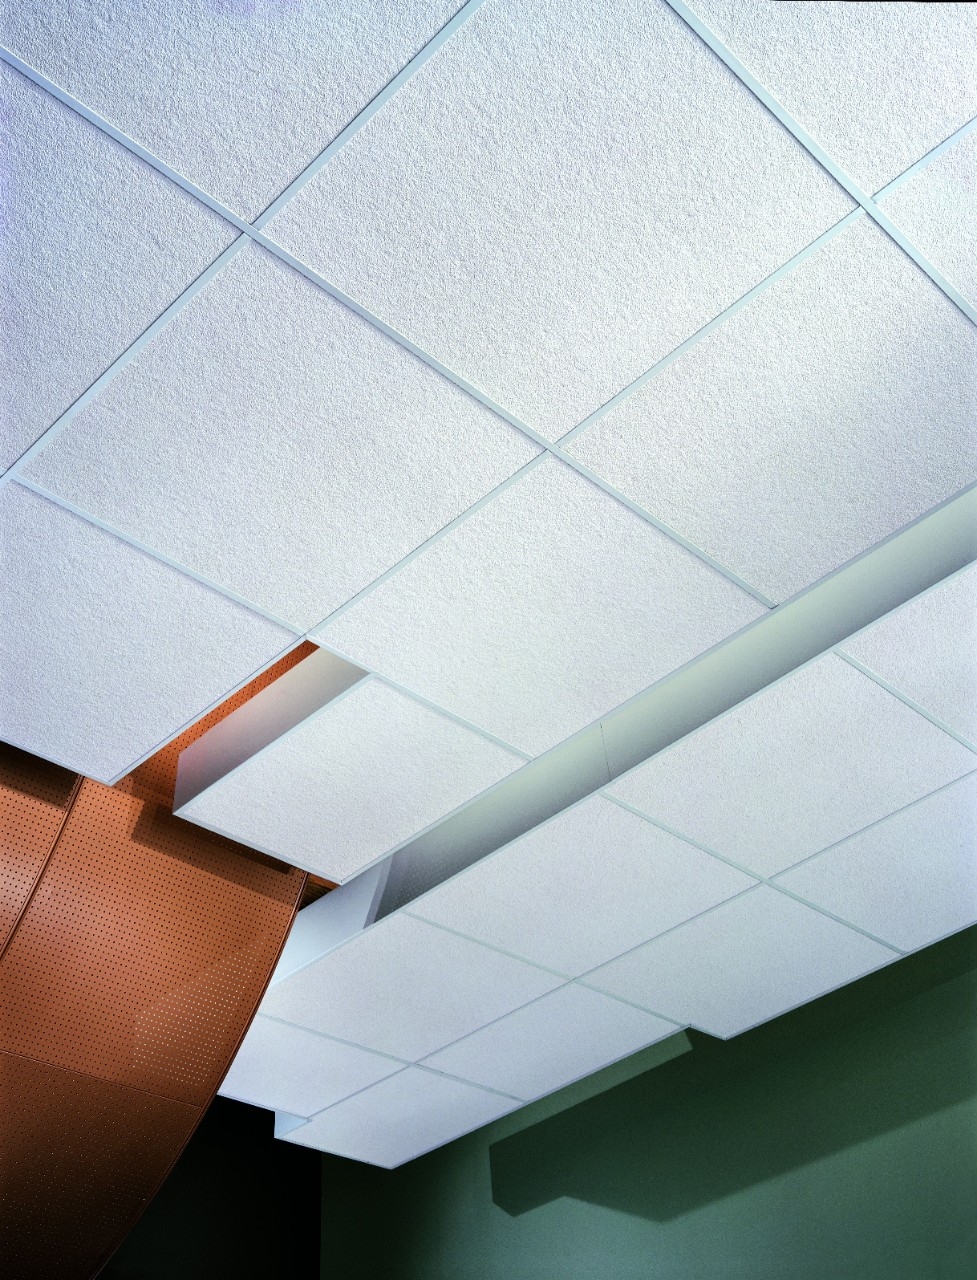 Acoustical Ceiling Tiles 24x24 Acoustical Ceiling Tiles 24×24 usg astro acoustical panels fire rated ceiling tiles 977 X 1280